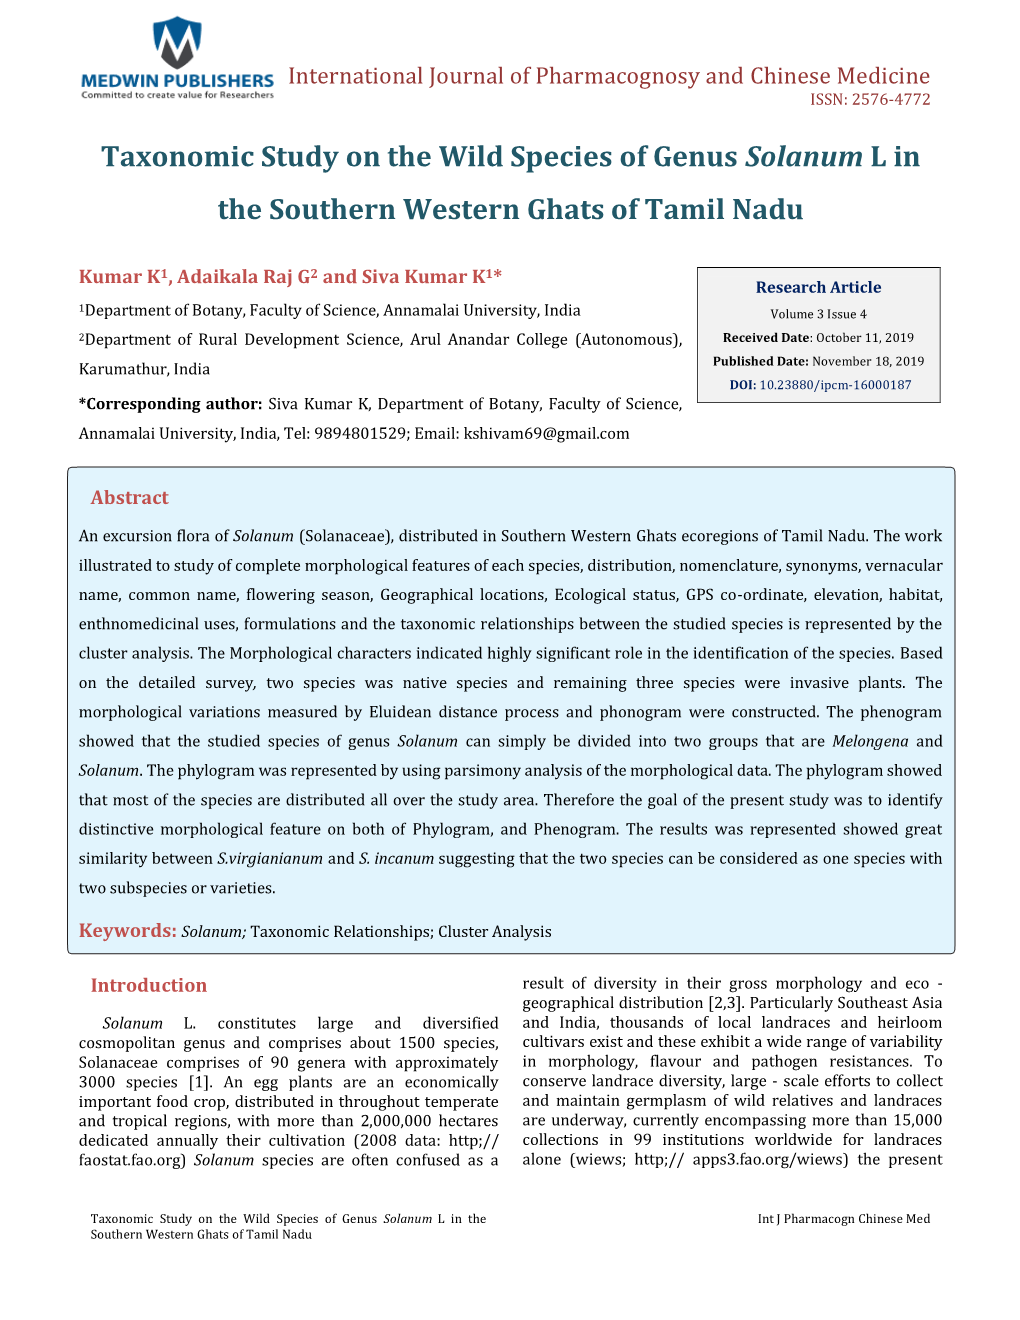 Taxonomic Study on the Wild Species of Genus Solanum L in the Southern Western Ghats of Tamil Nadu